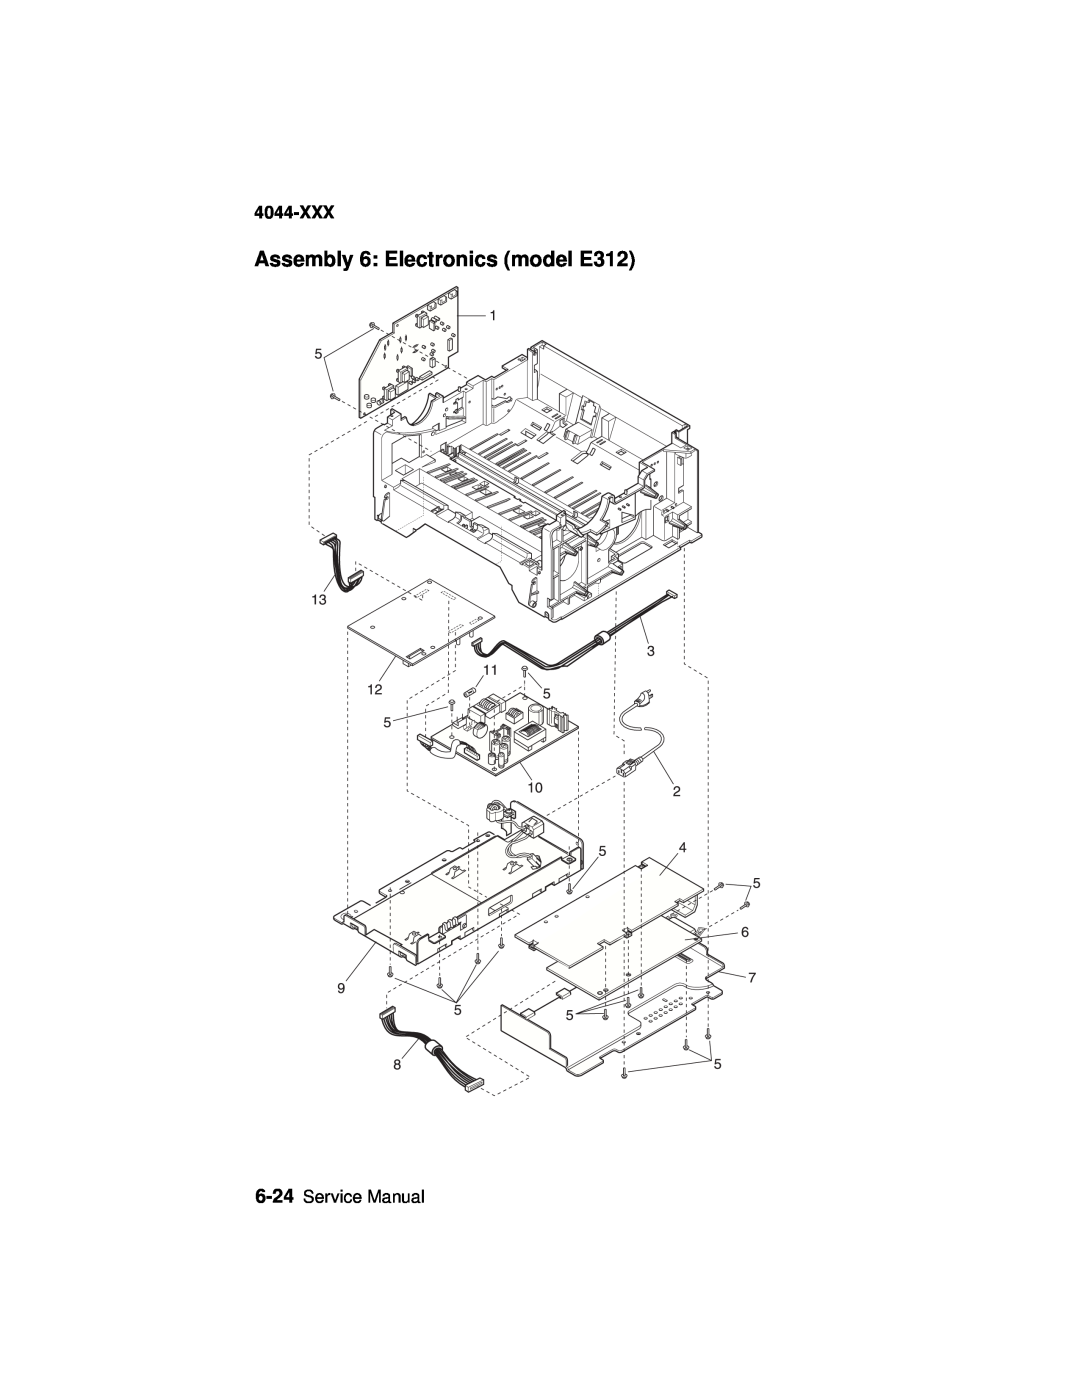 Lexmark 4044-XXX, E310 manual Assembly 6: Electronics model E312, Service Manual 